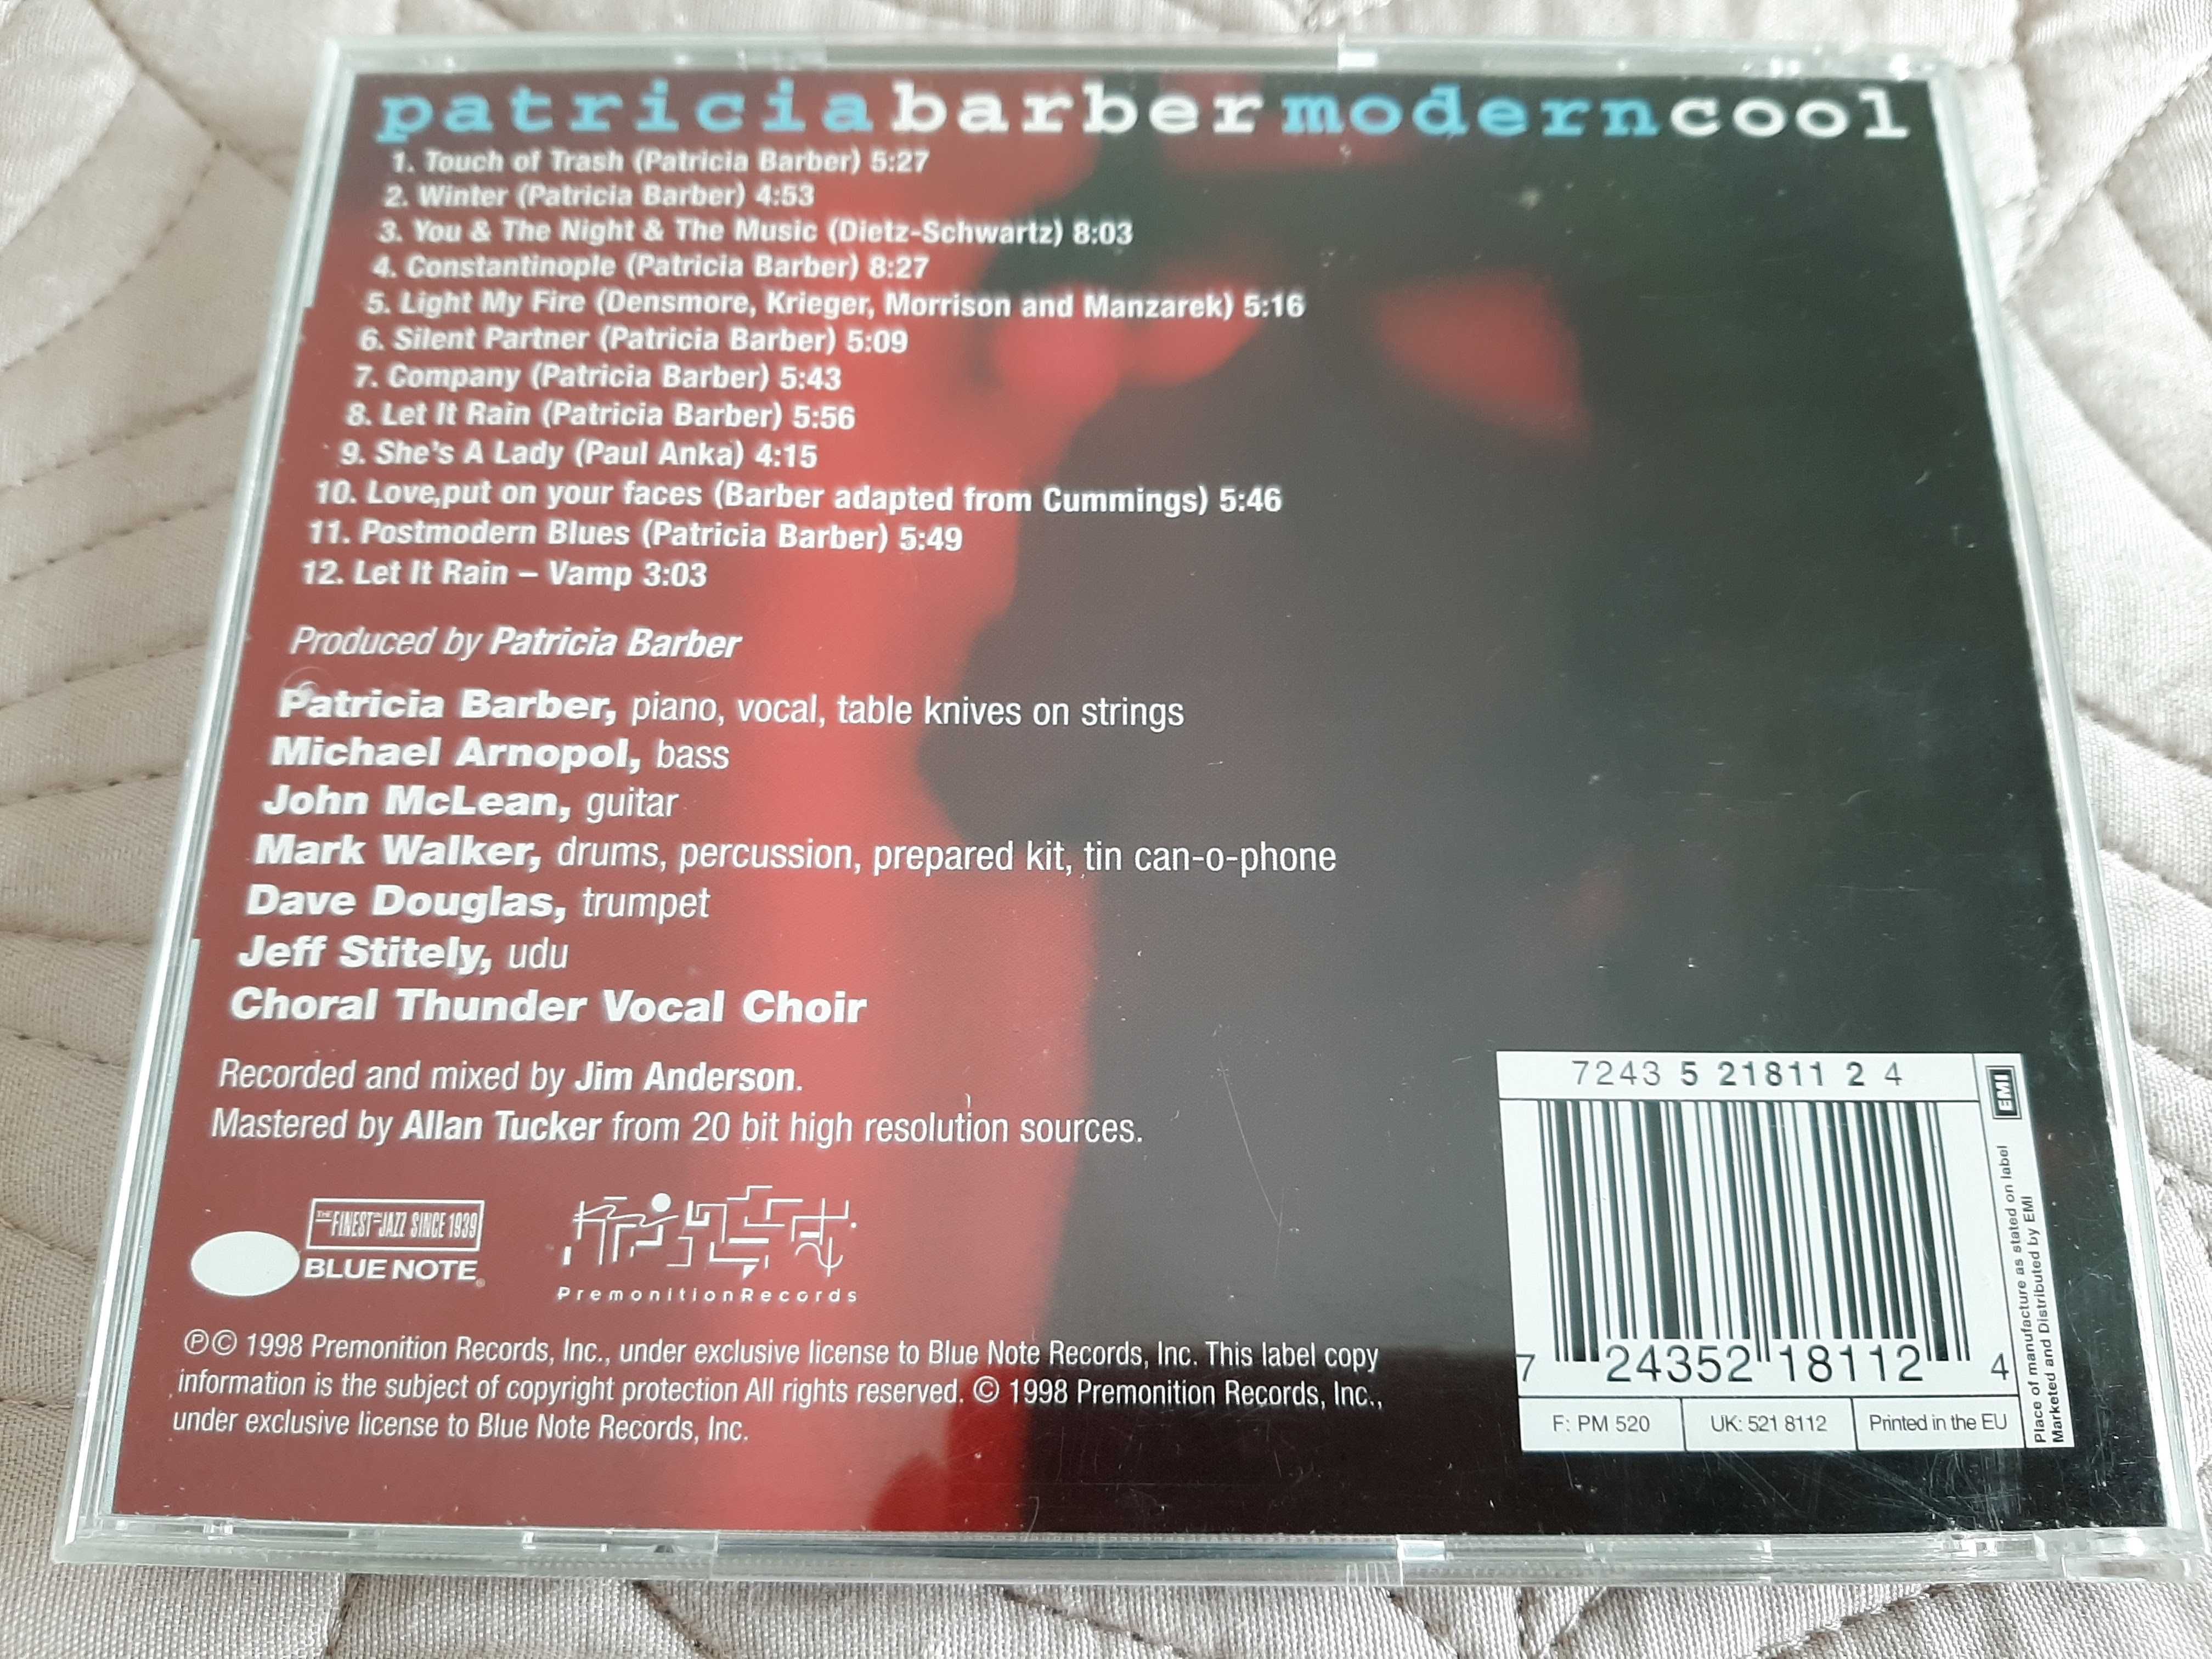 Patricia Barber - Modern Cool - CD